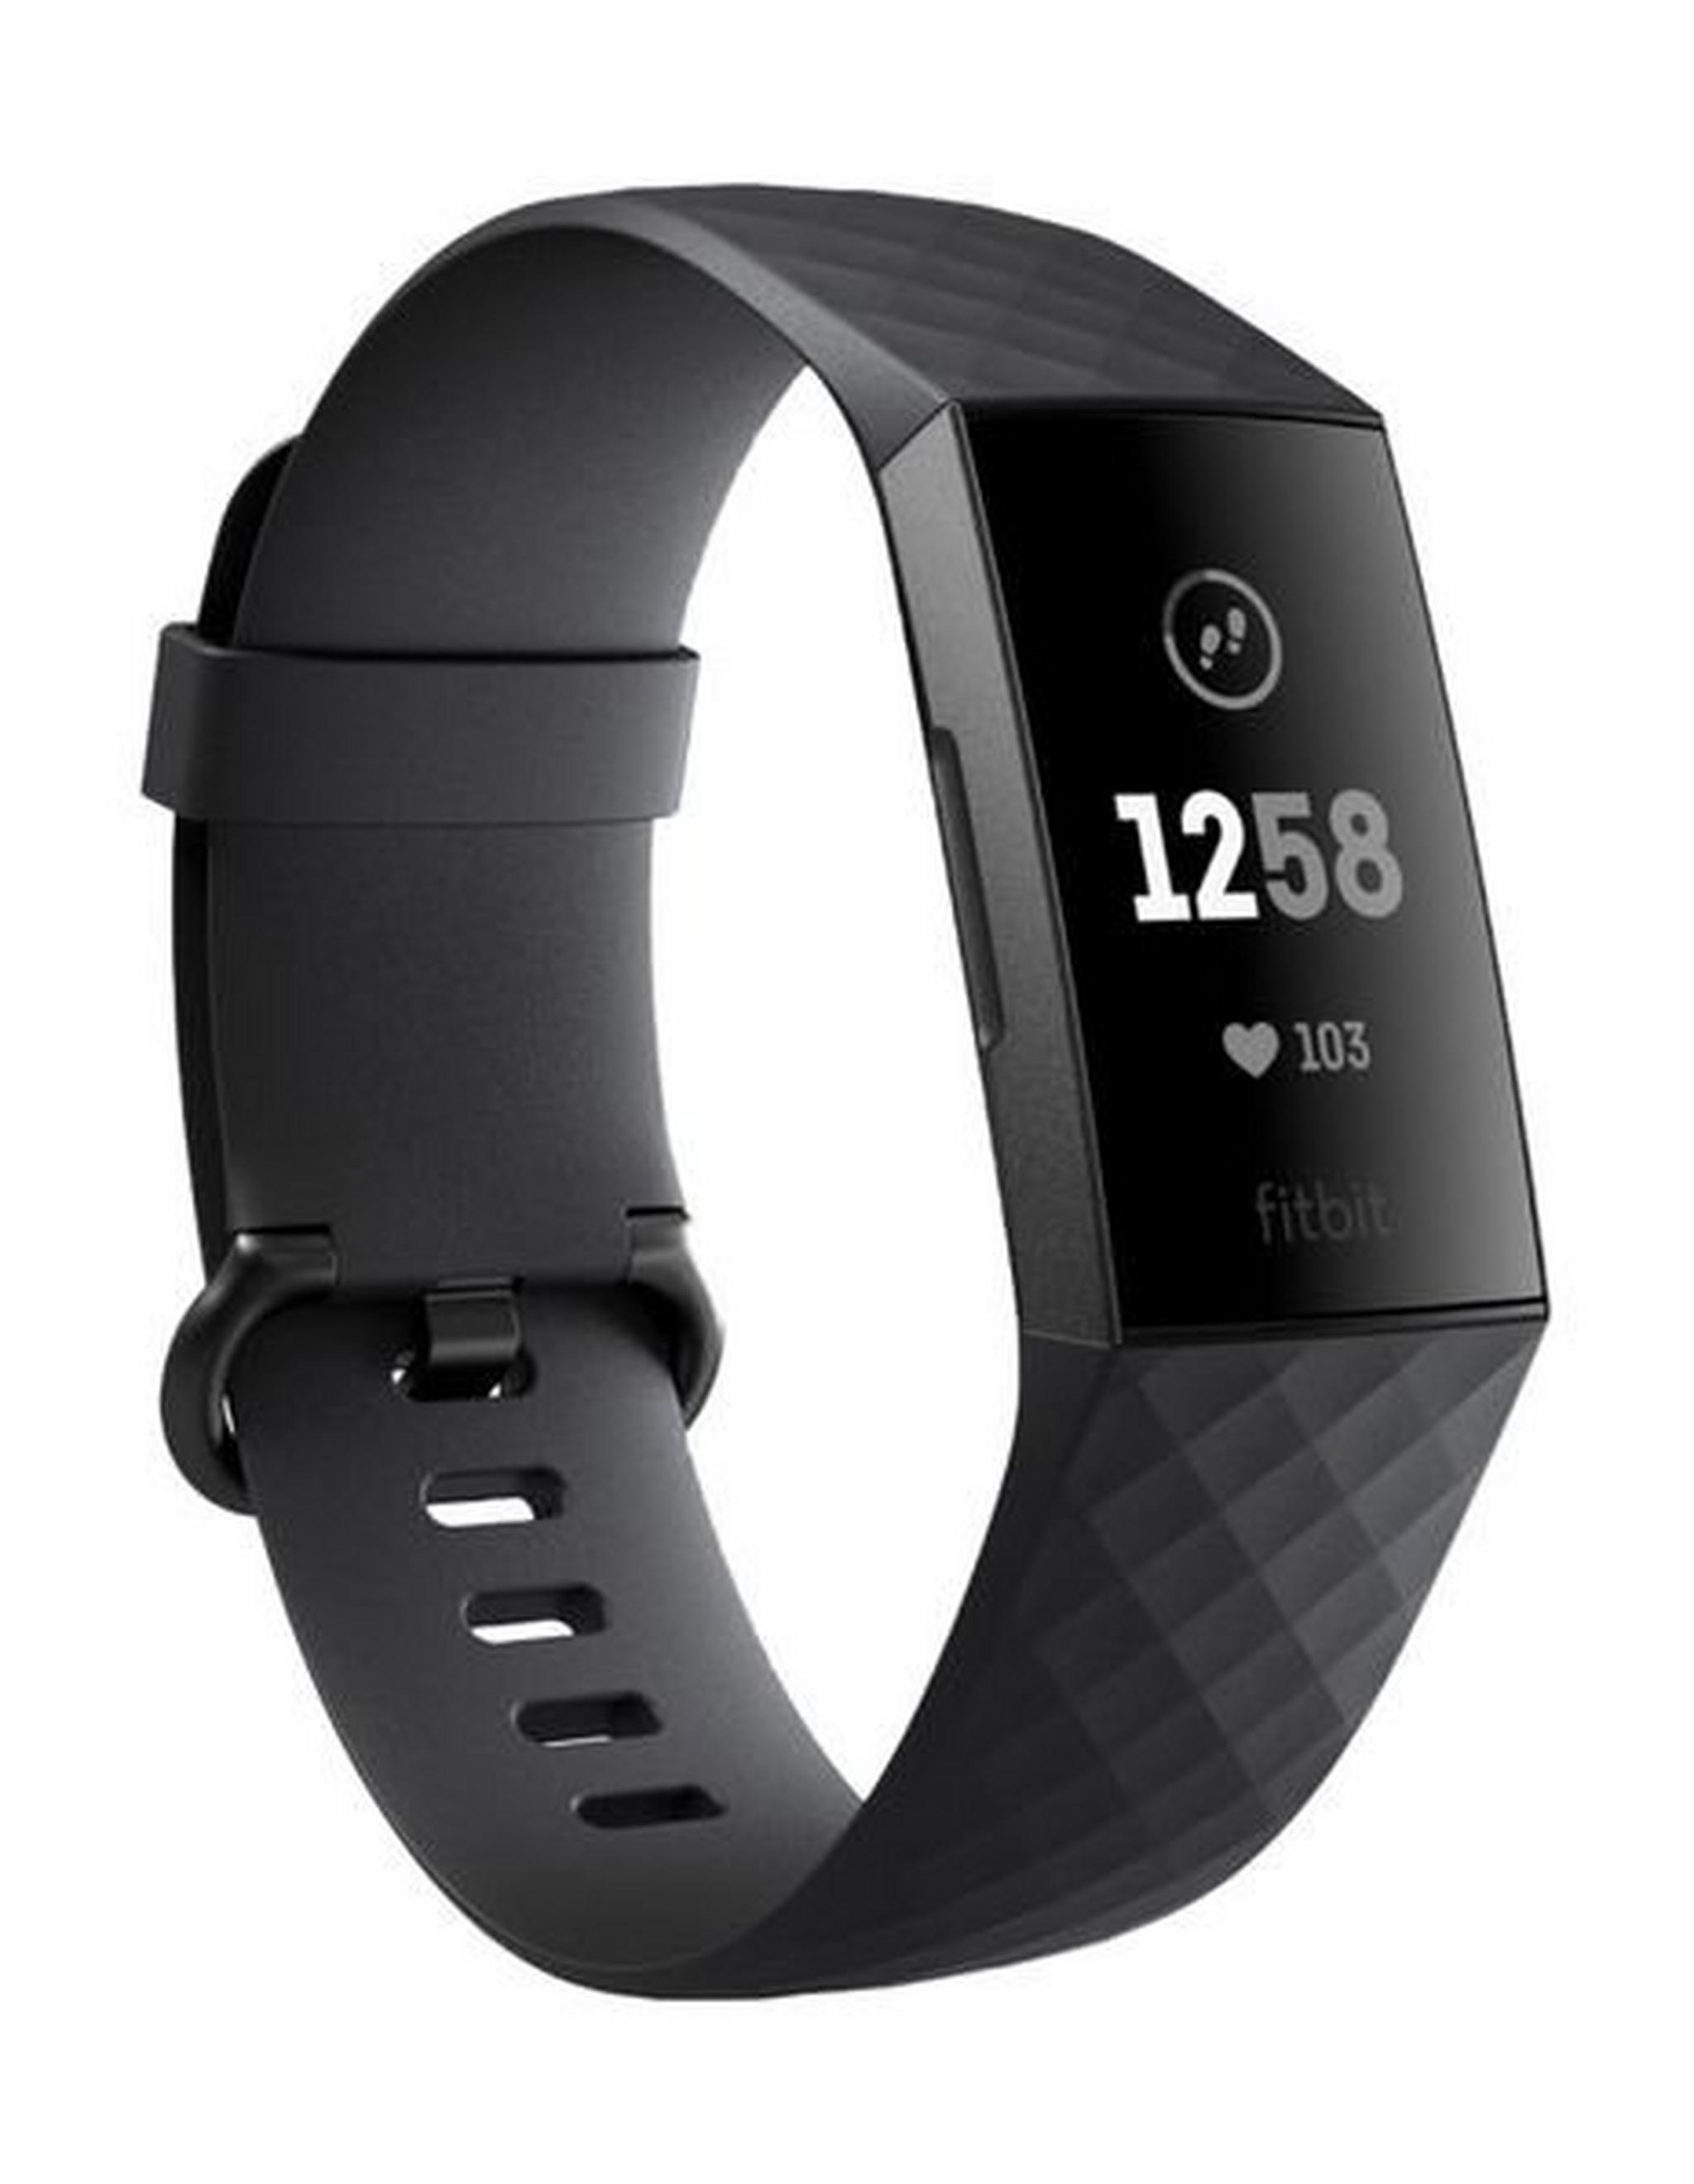 Fitbit Charge 3 Fitness Wristband (FB409GMBK-EU) - Black/Graphite Aluminum